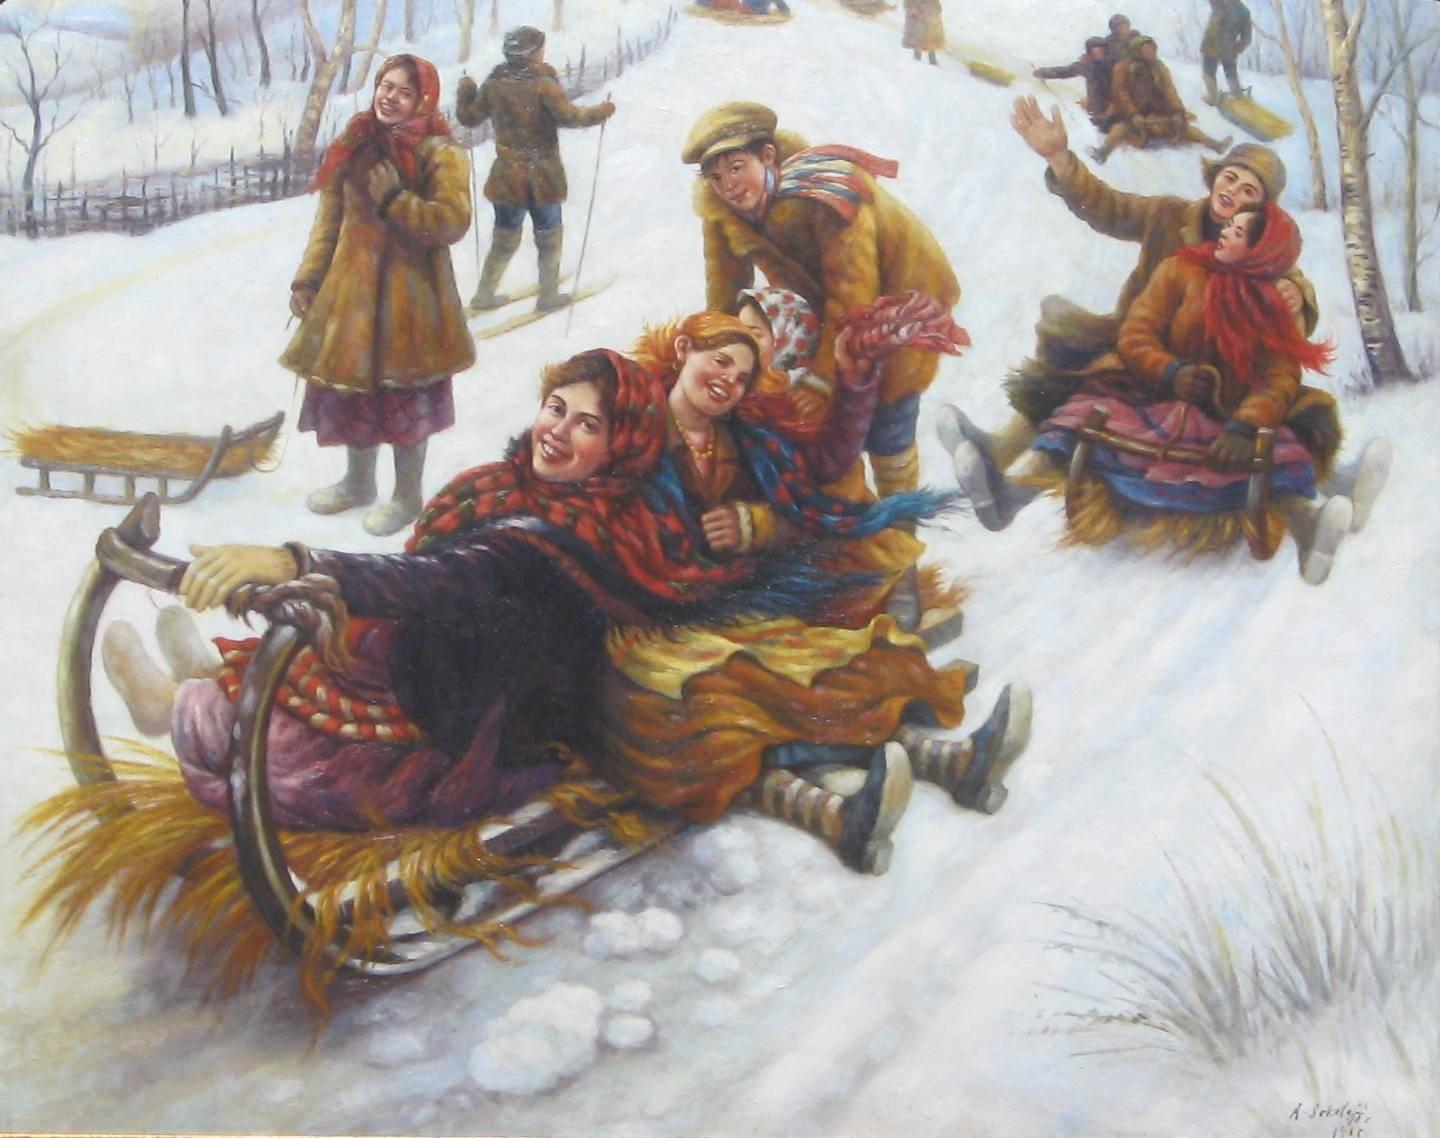 Russian subject by Anatoly Sokoloff (1891-1971).
